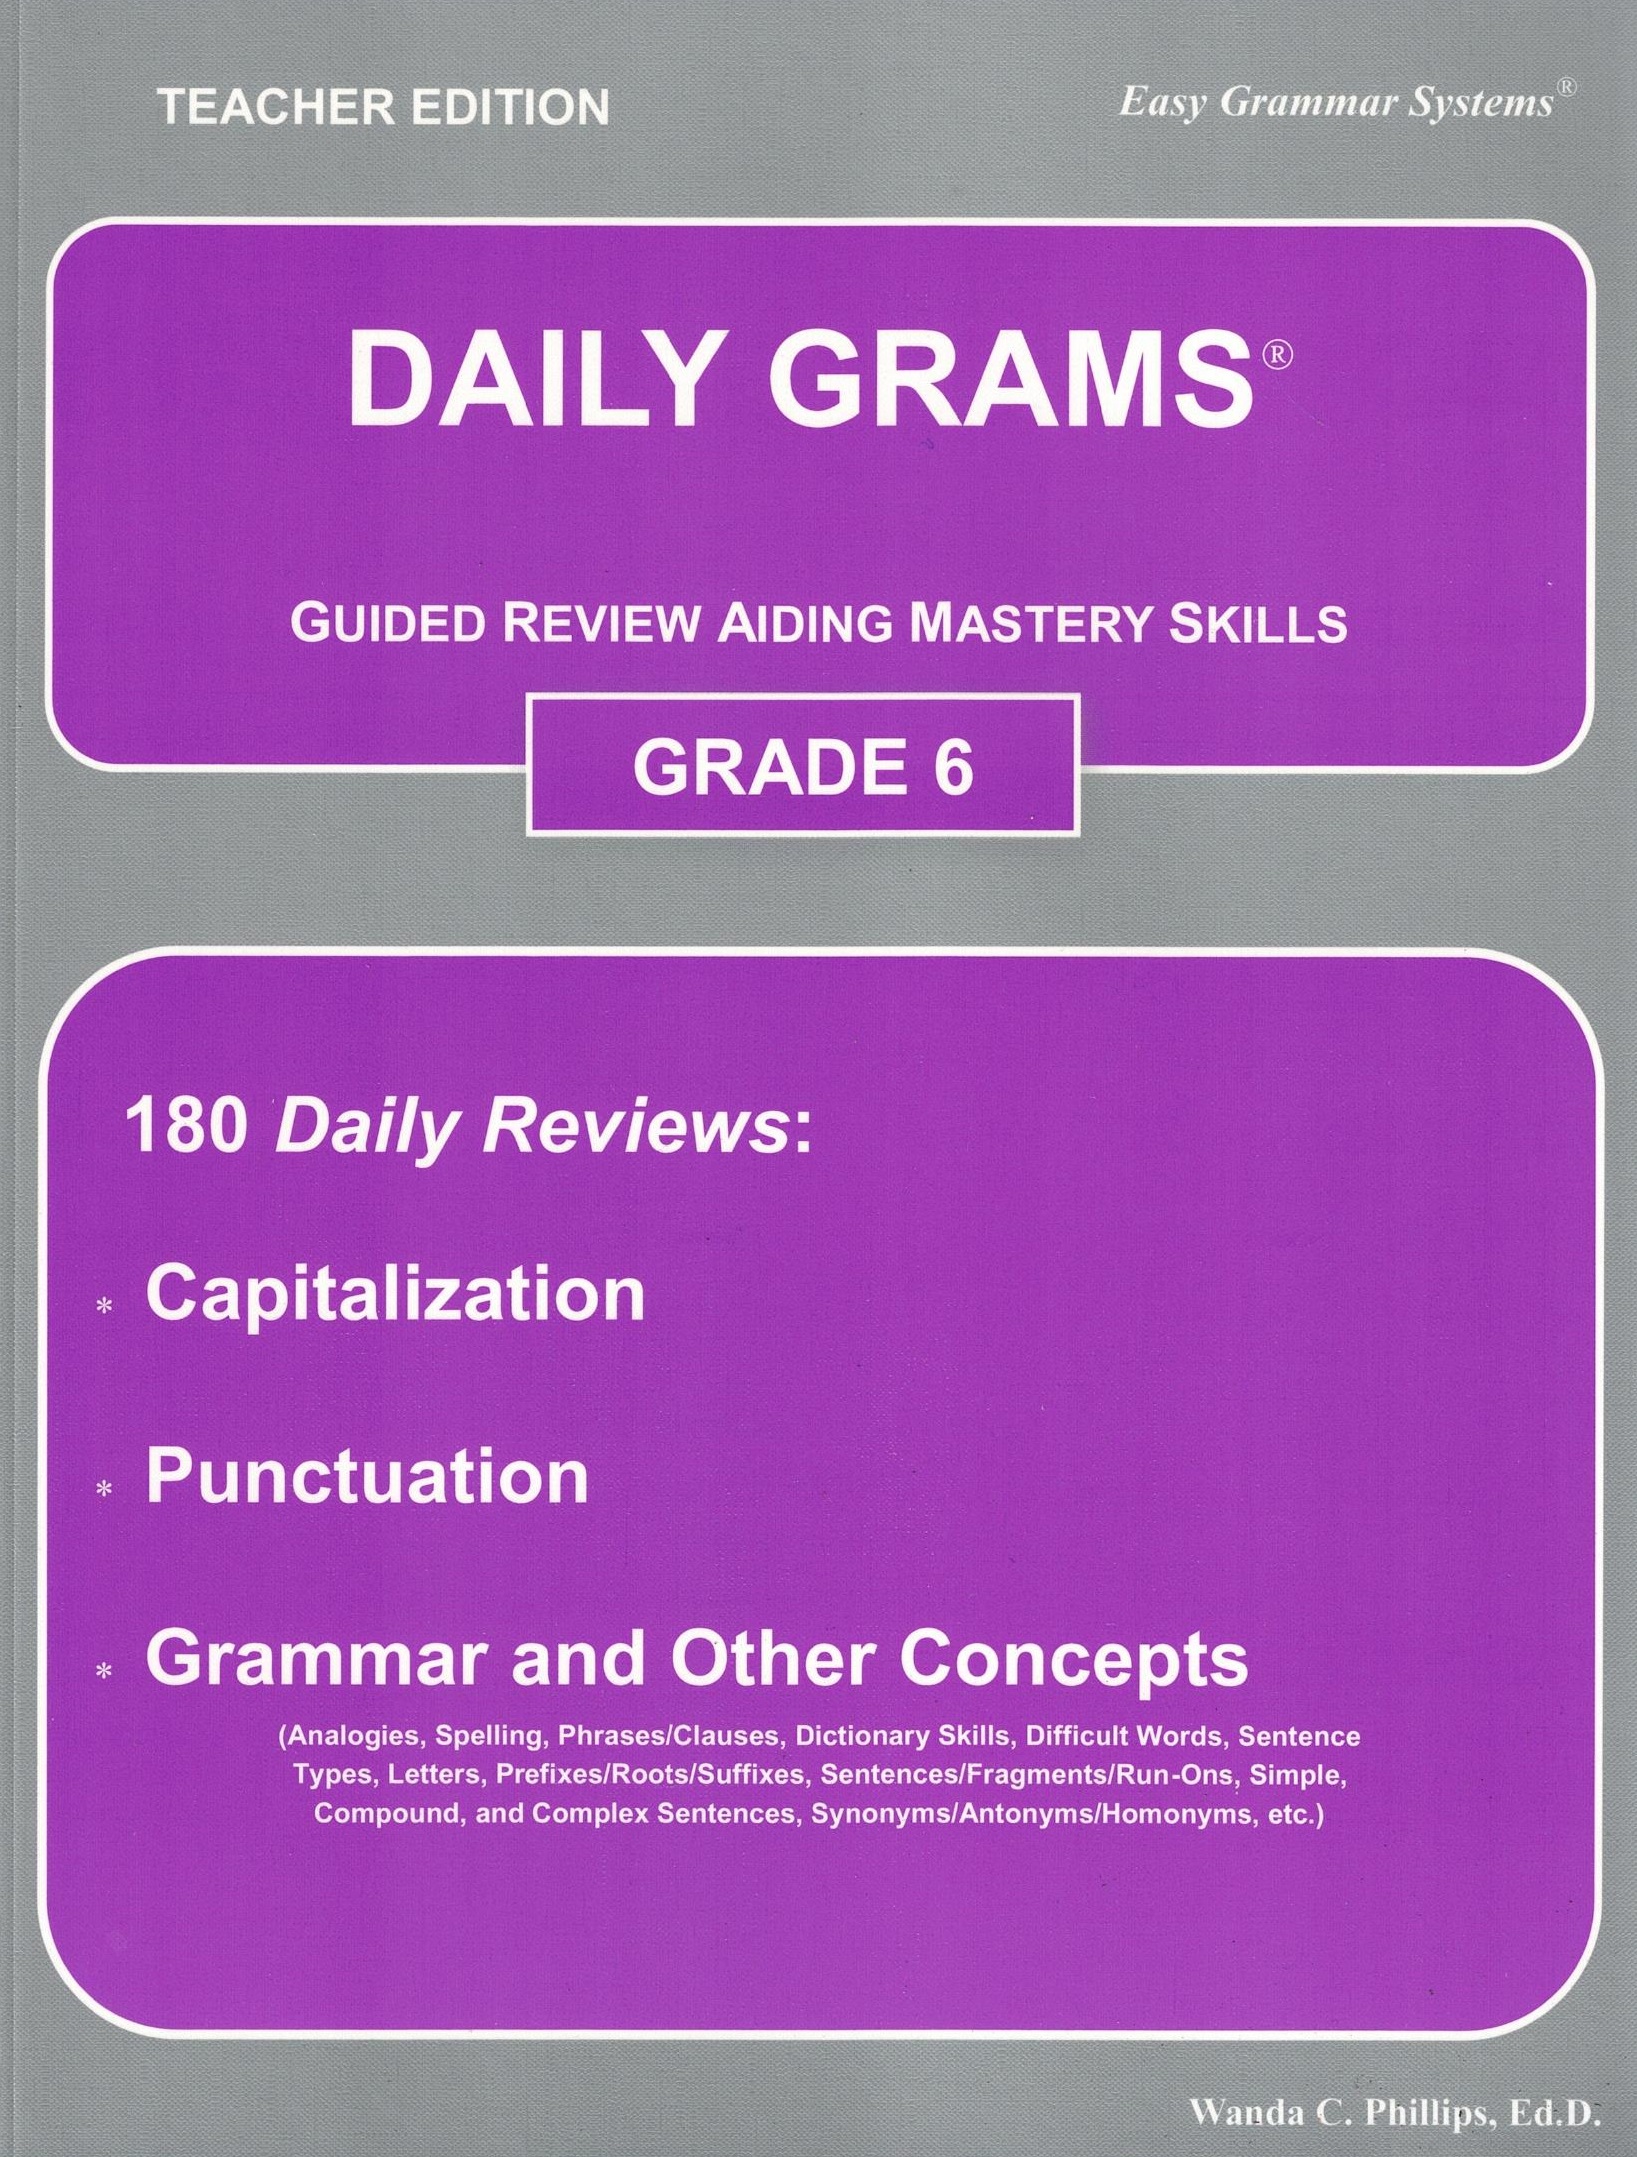 Edition　Home　Grade　for　Teacher　Daily　Works　Grams　Books